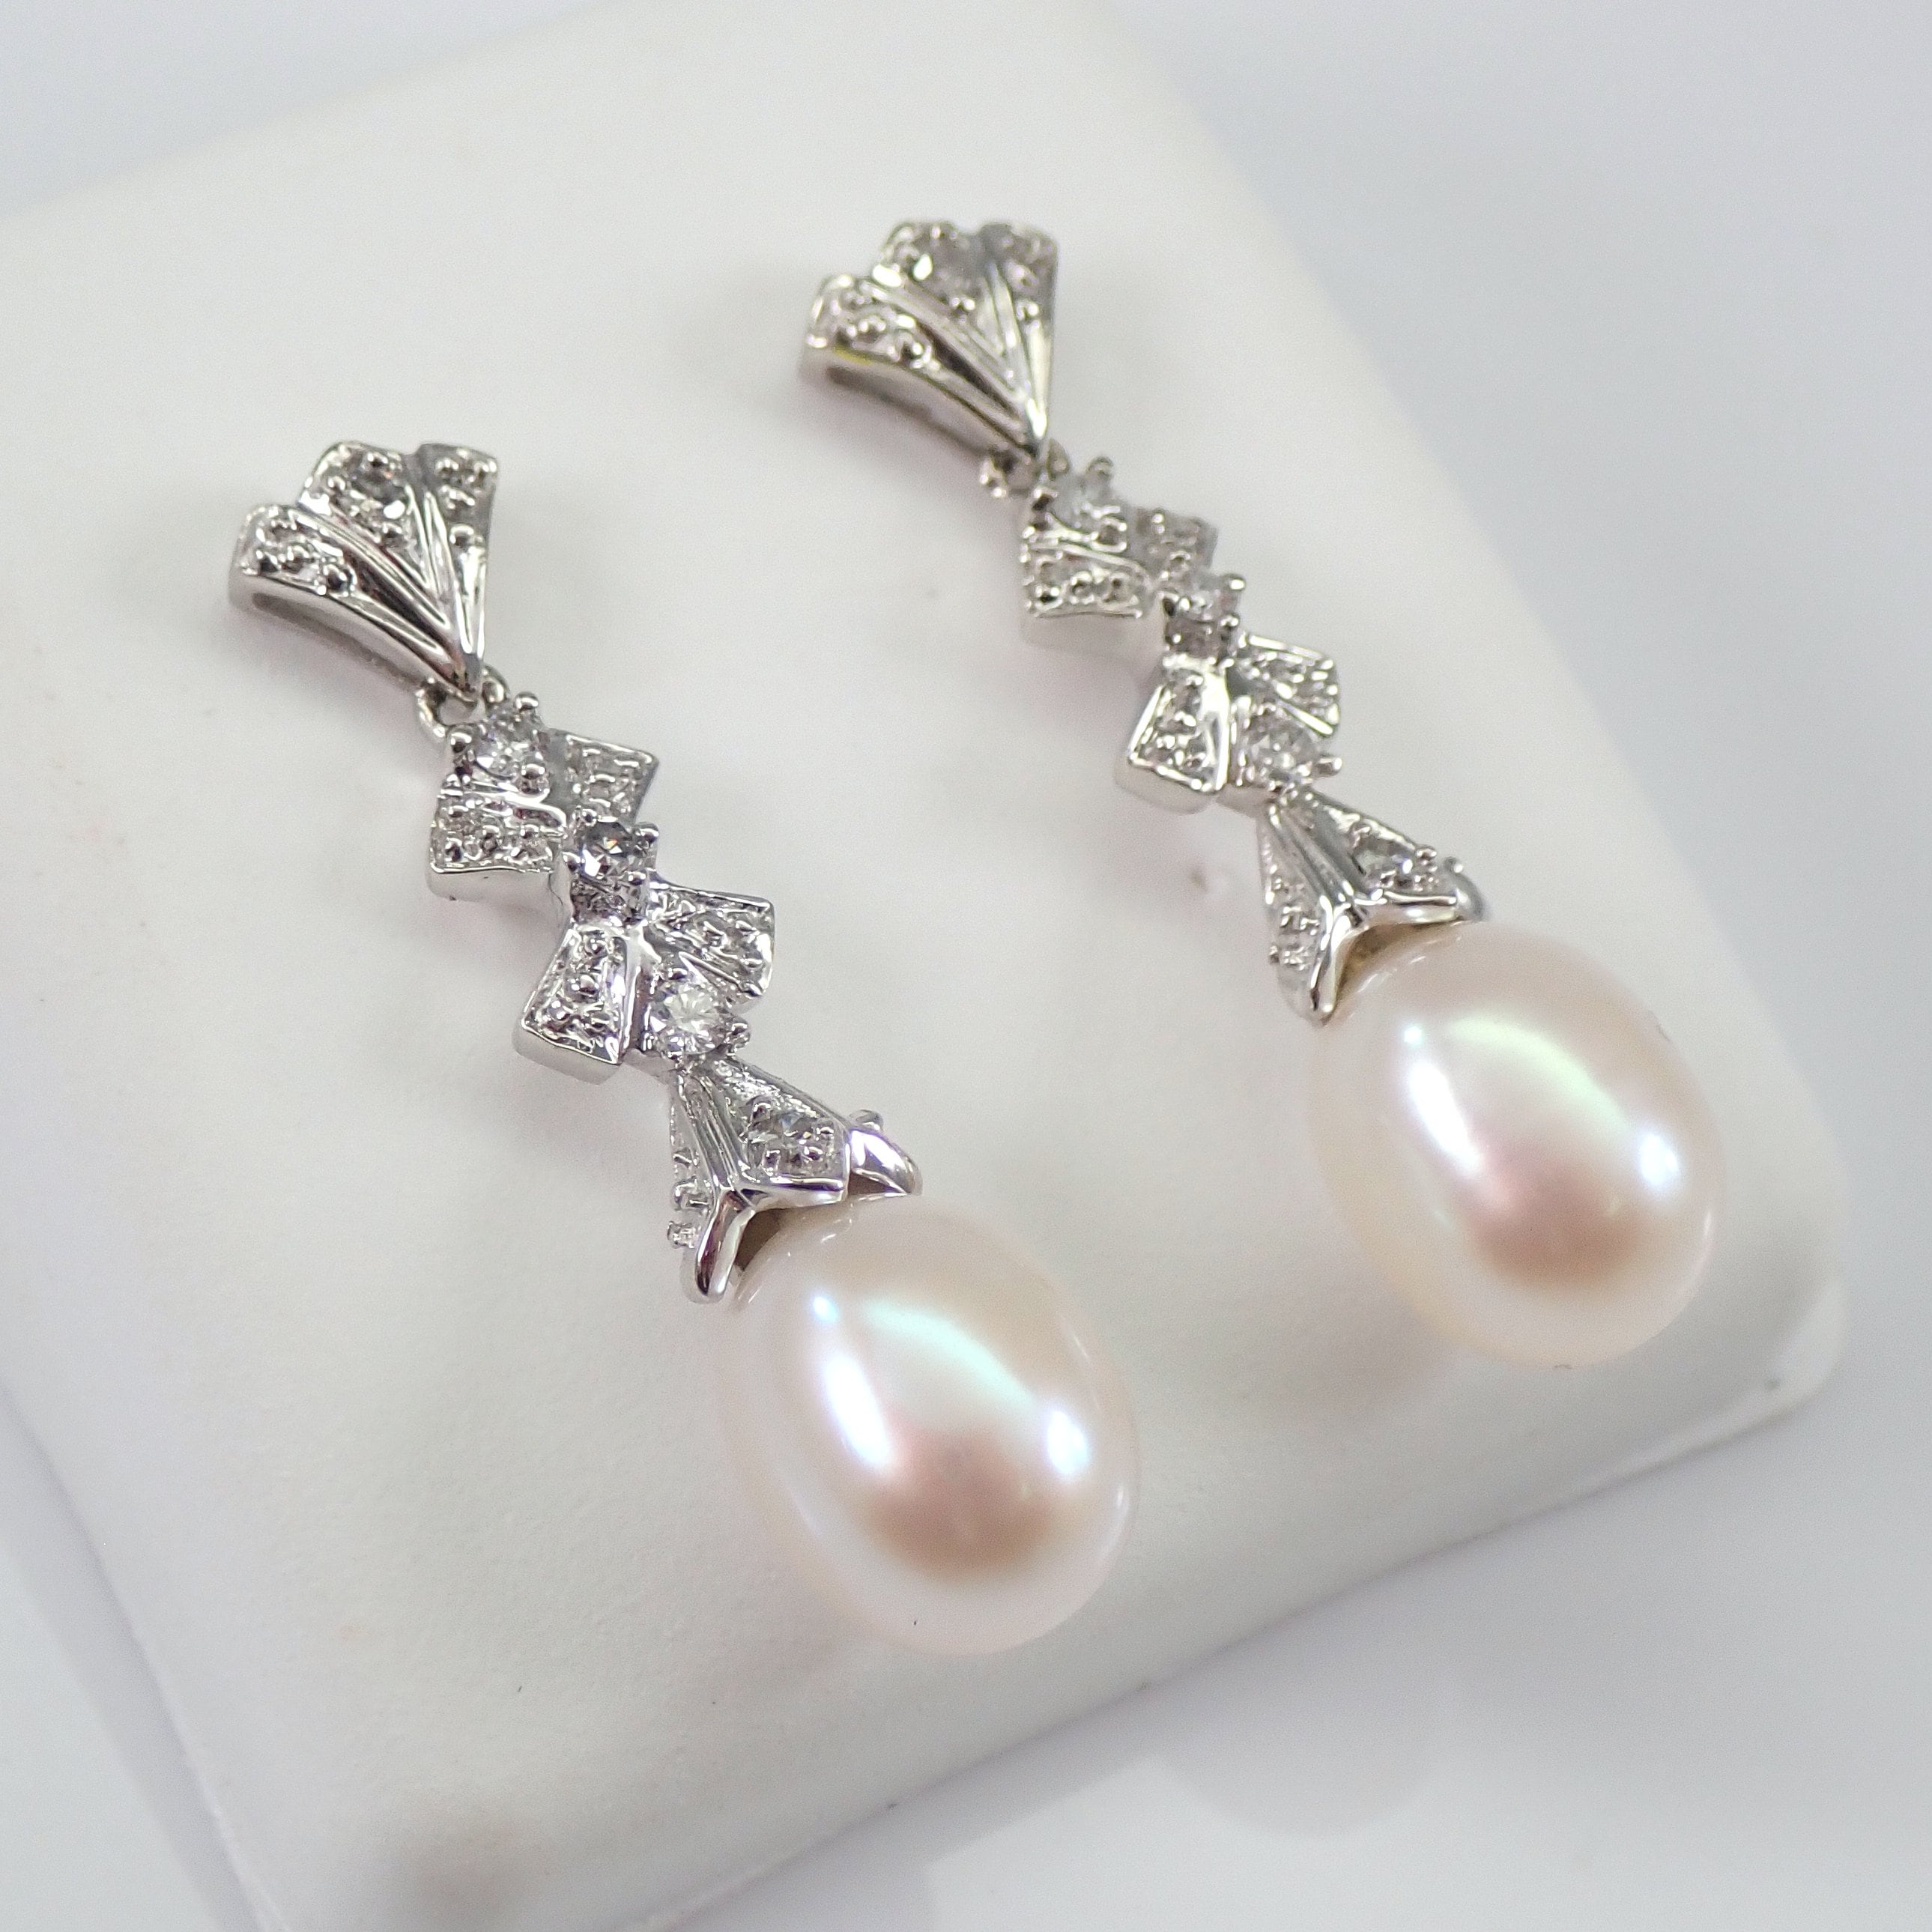 Pearl And Diamond Dangle Drop Earrings K White Gold June Birthstone